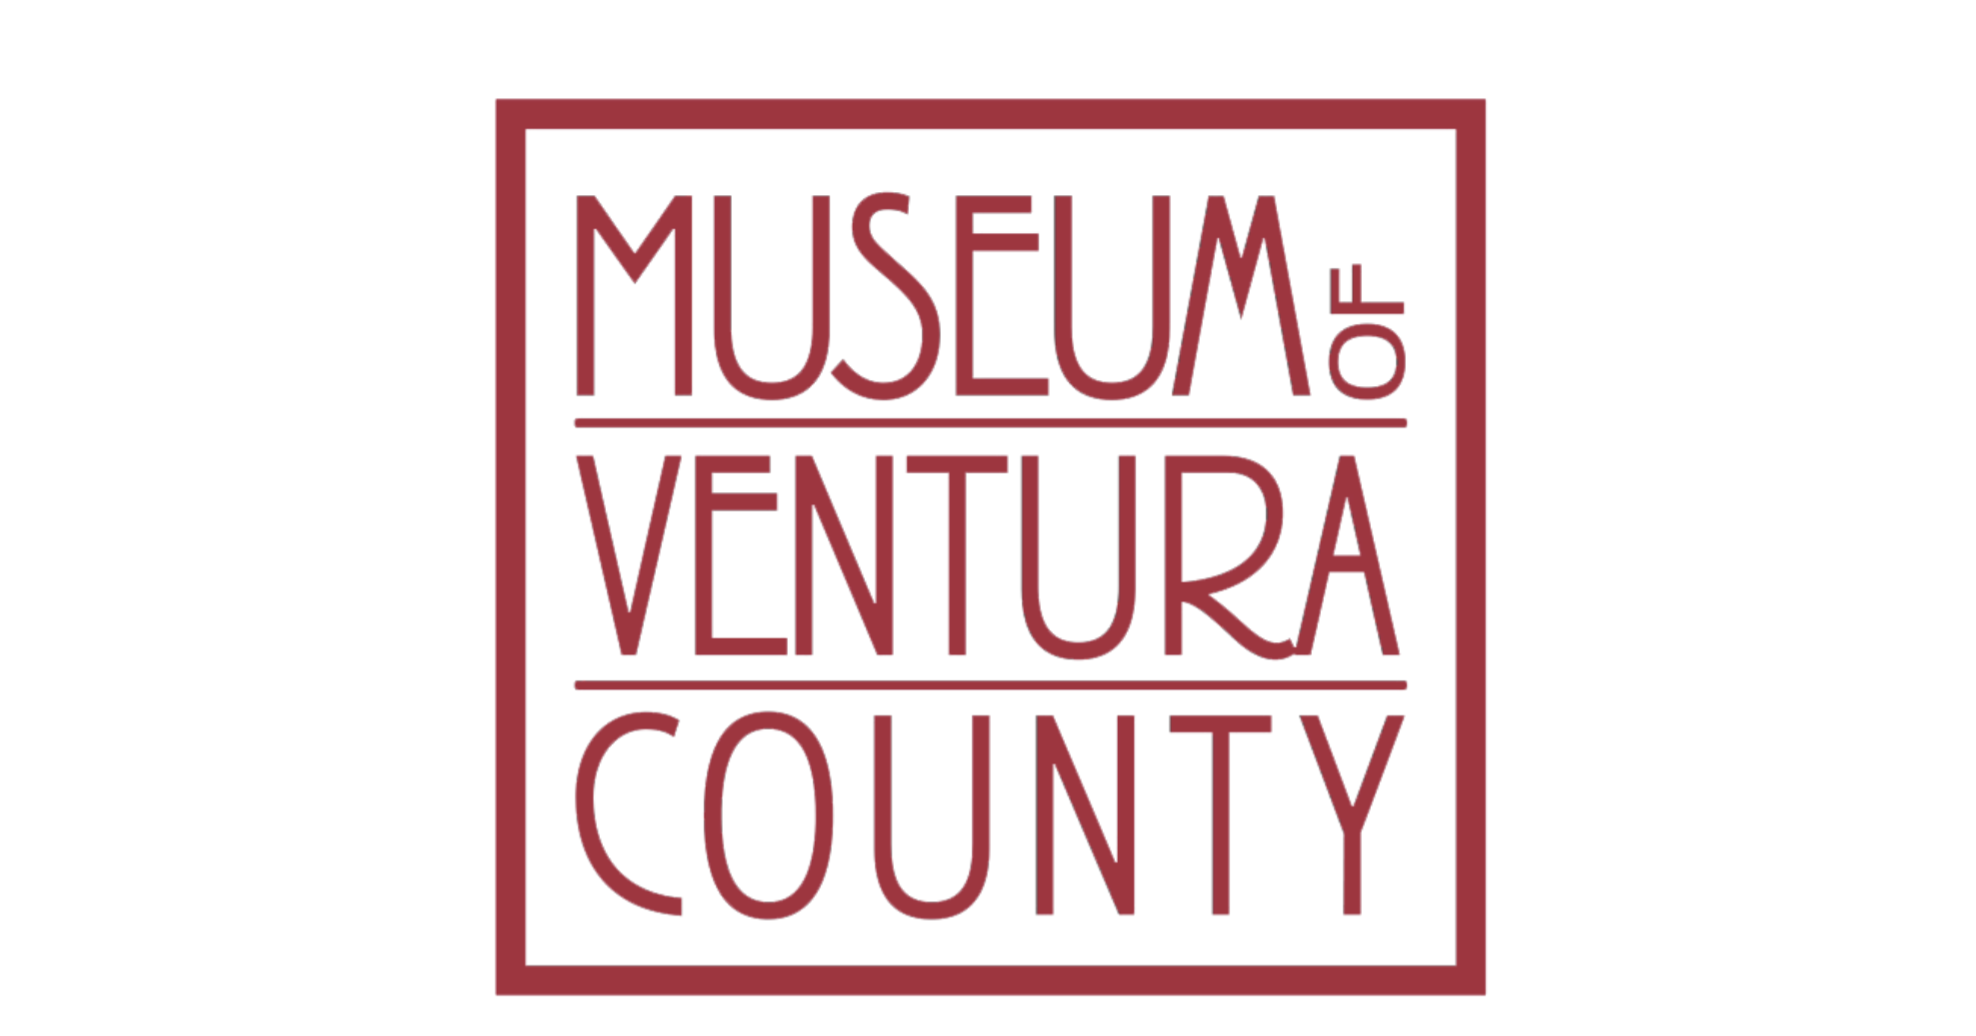 Museum of Ventura County